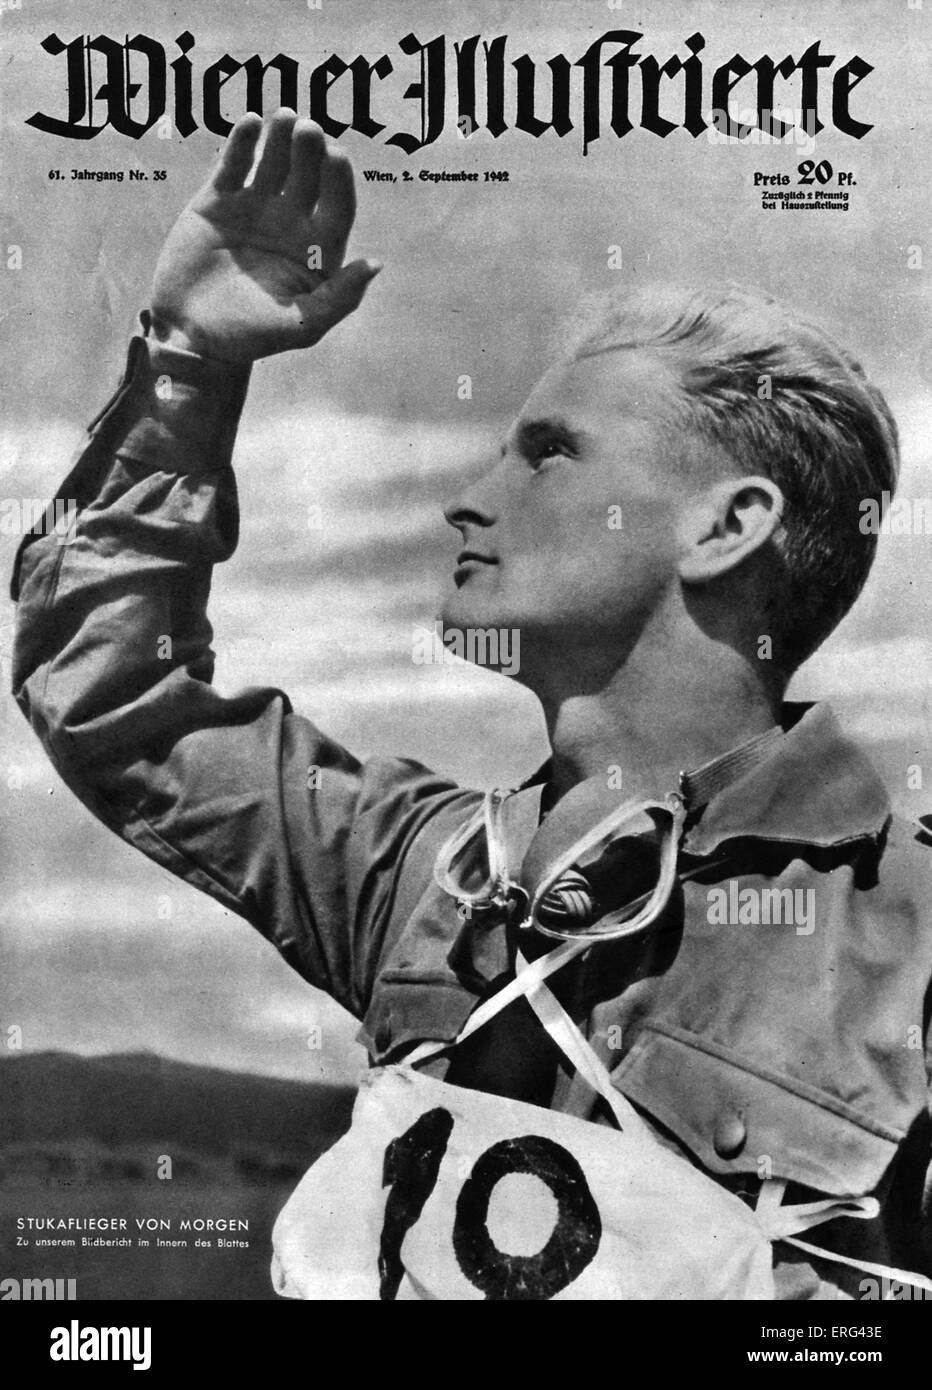 Stuka Pilot on cover of Wiener Illustrierte 2 September 1942. Caption reads Stukaflieger von morgen (Stuka pilot of the future). During World War II Stock Photo